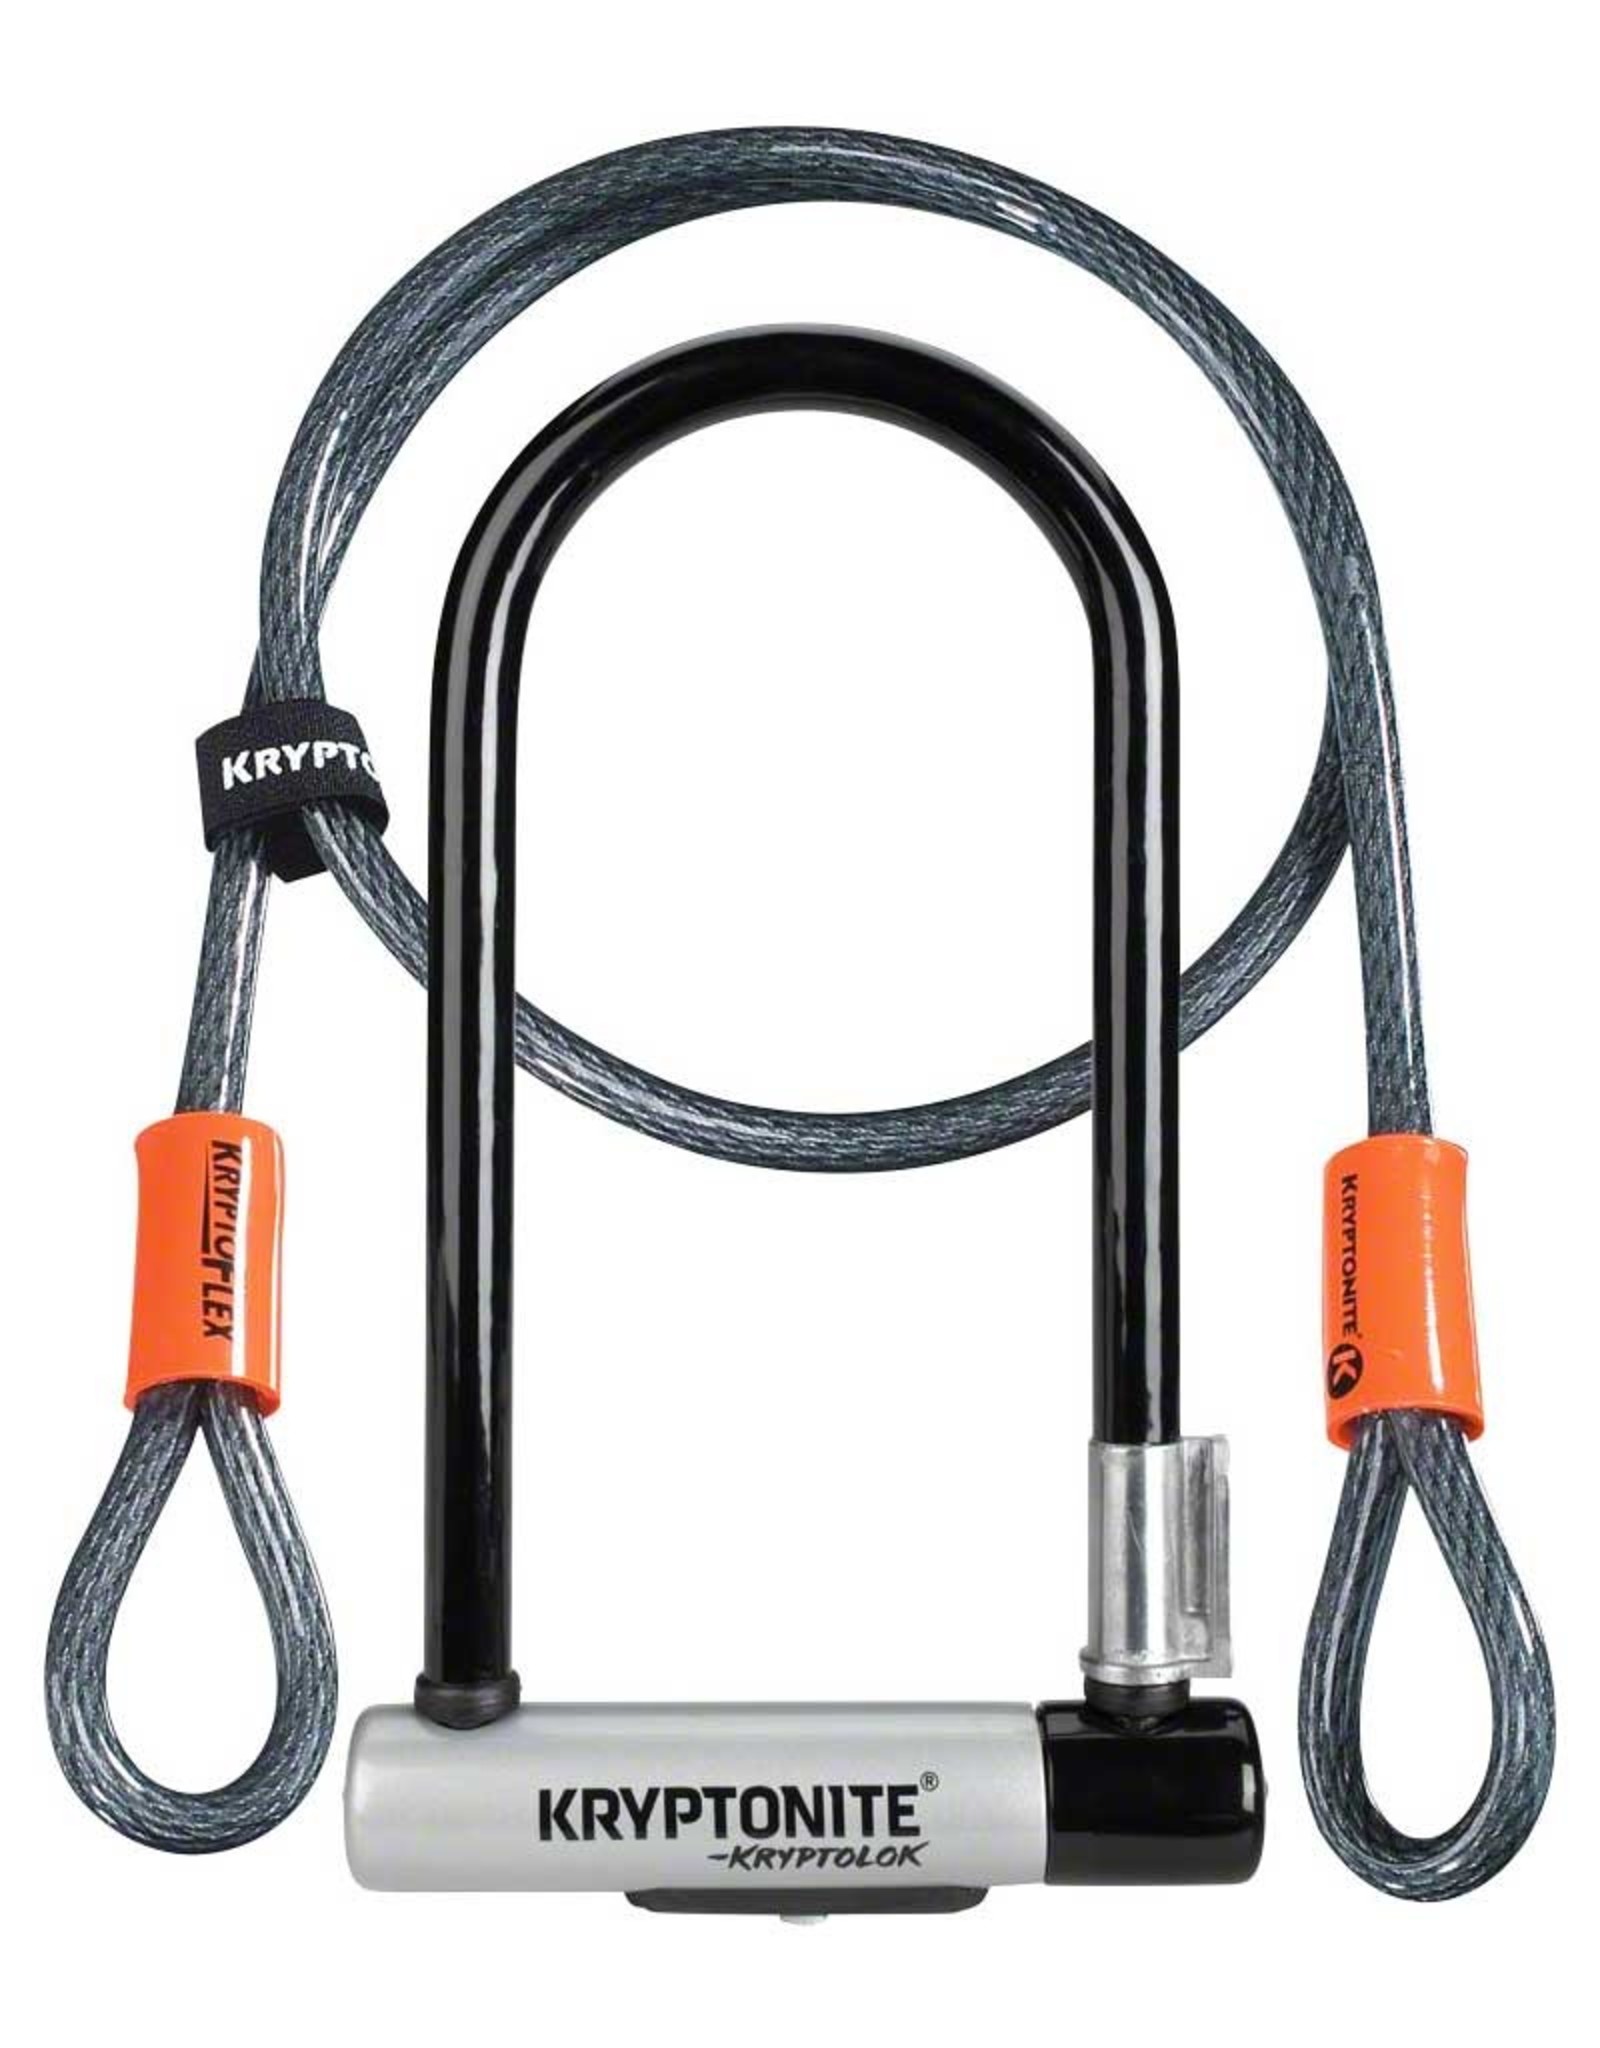 Kryptonite Lock - Kryptonite - Kryptolok - STD w/ Cable